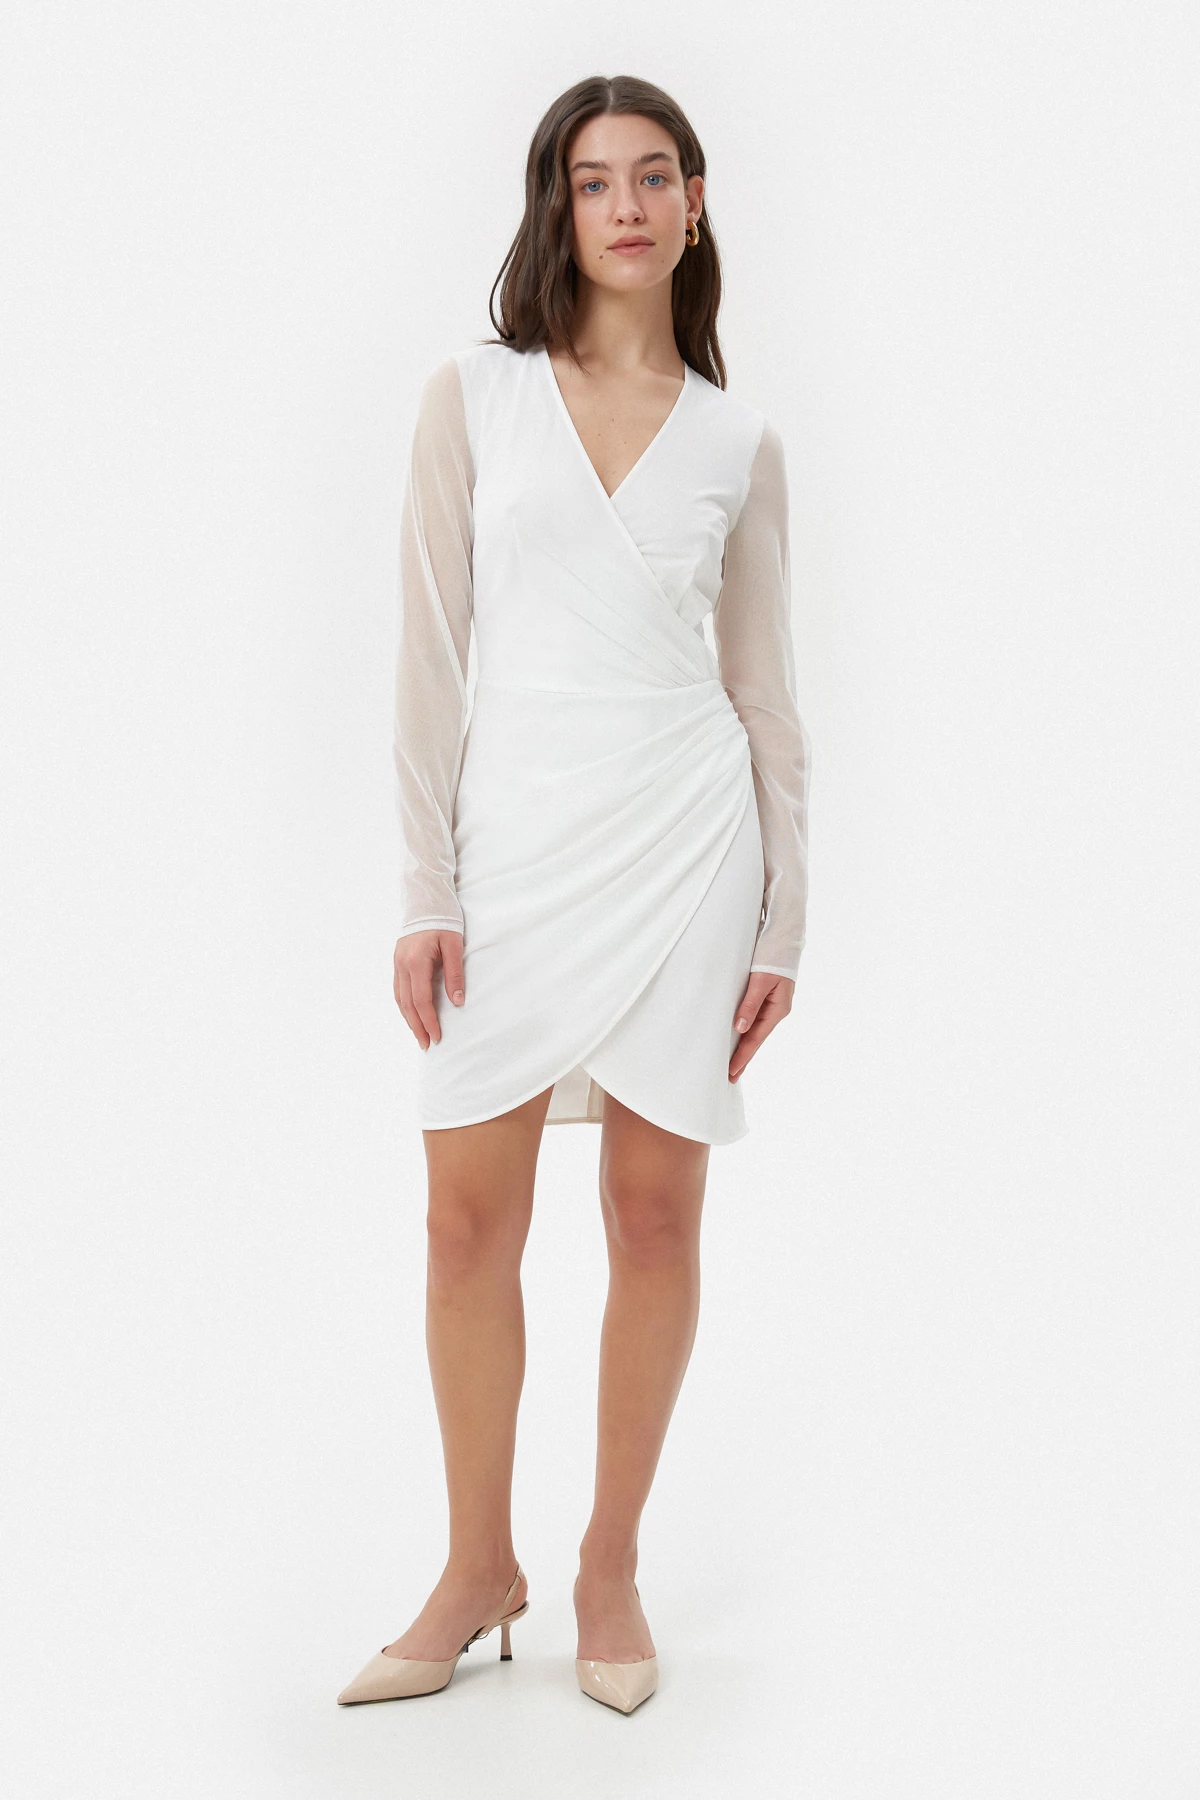 Short milky white mesh dress, photo 4